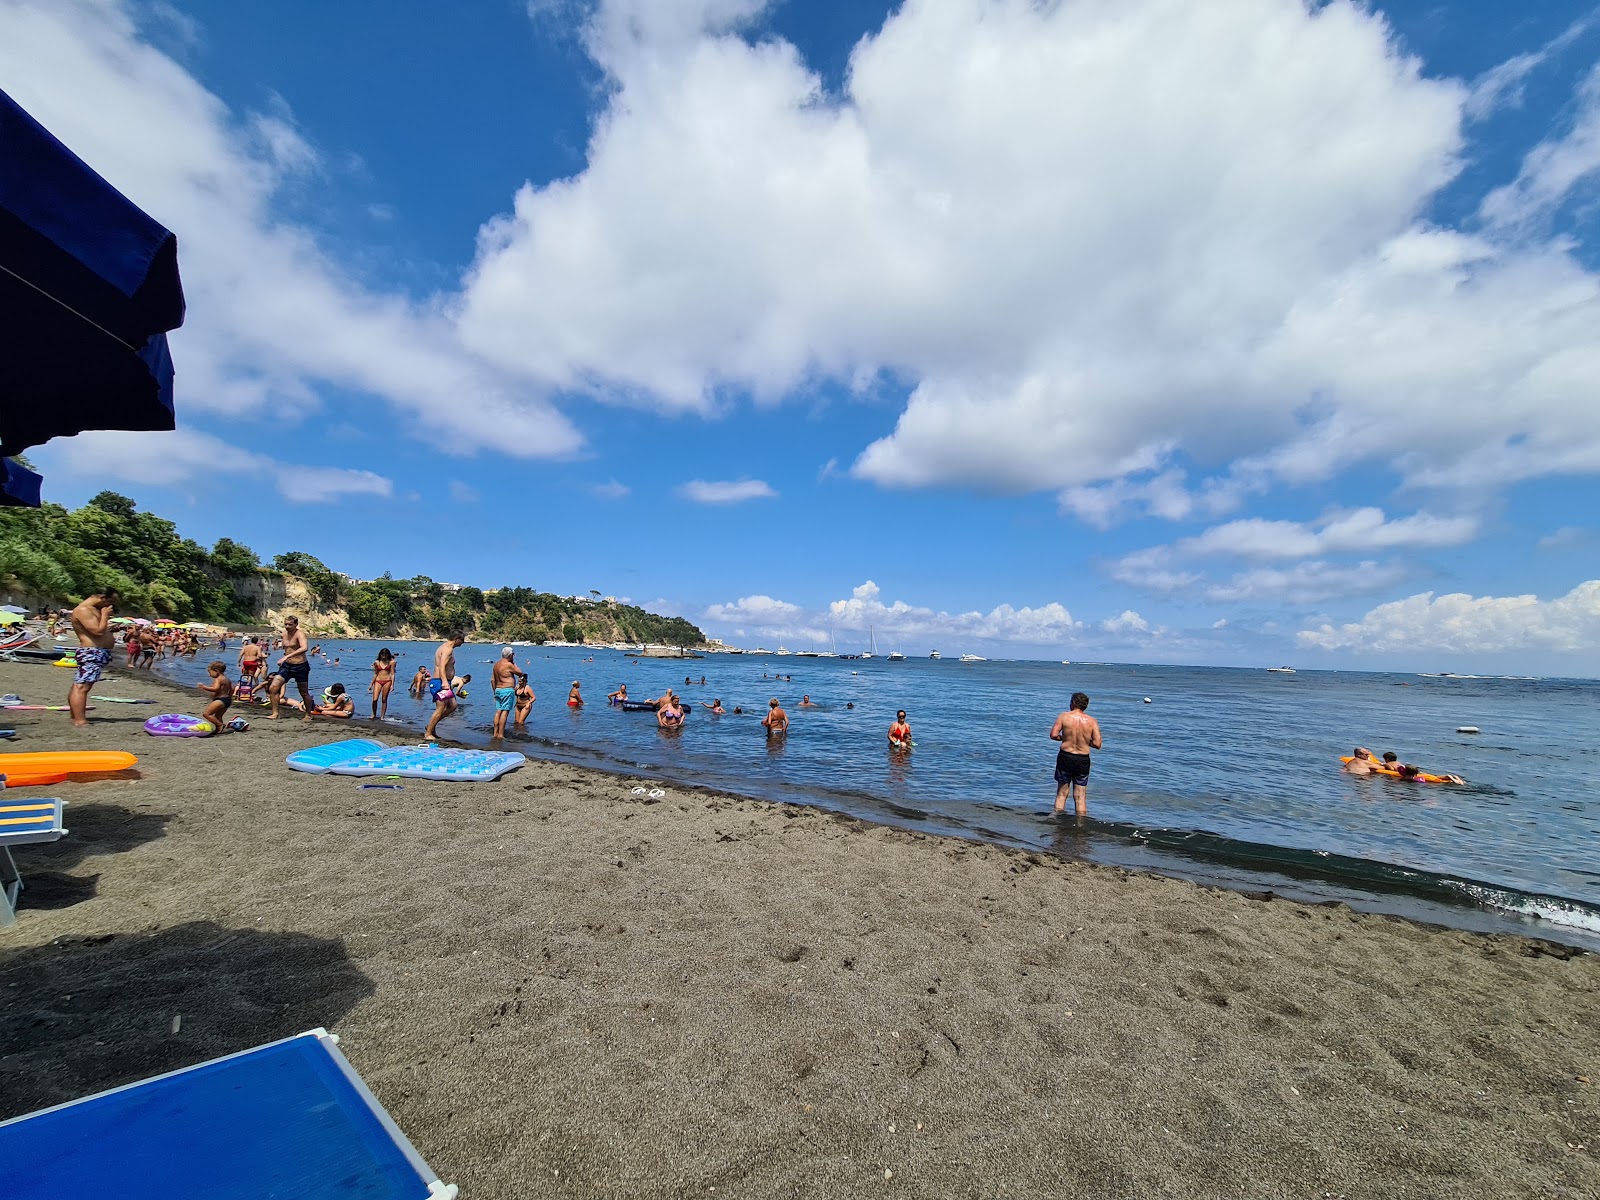 Foto av Spiaggia di Silurenza med blått vatten yta